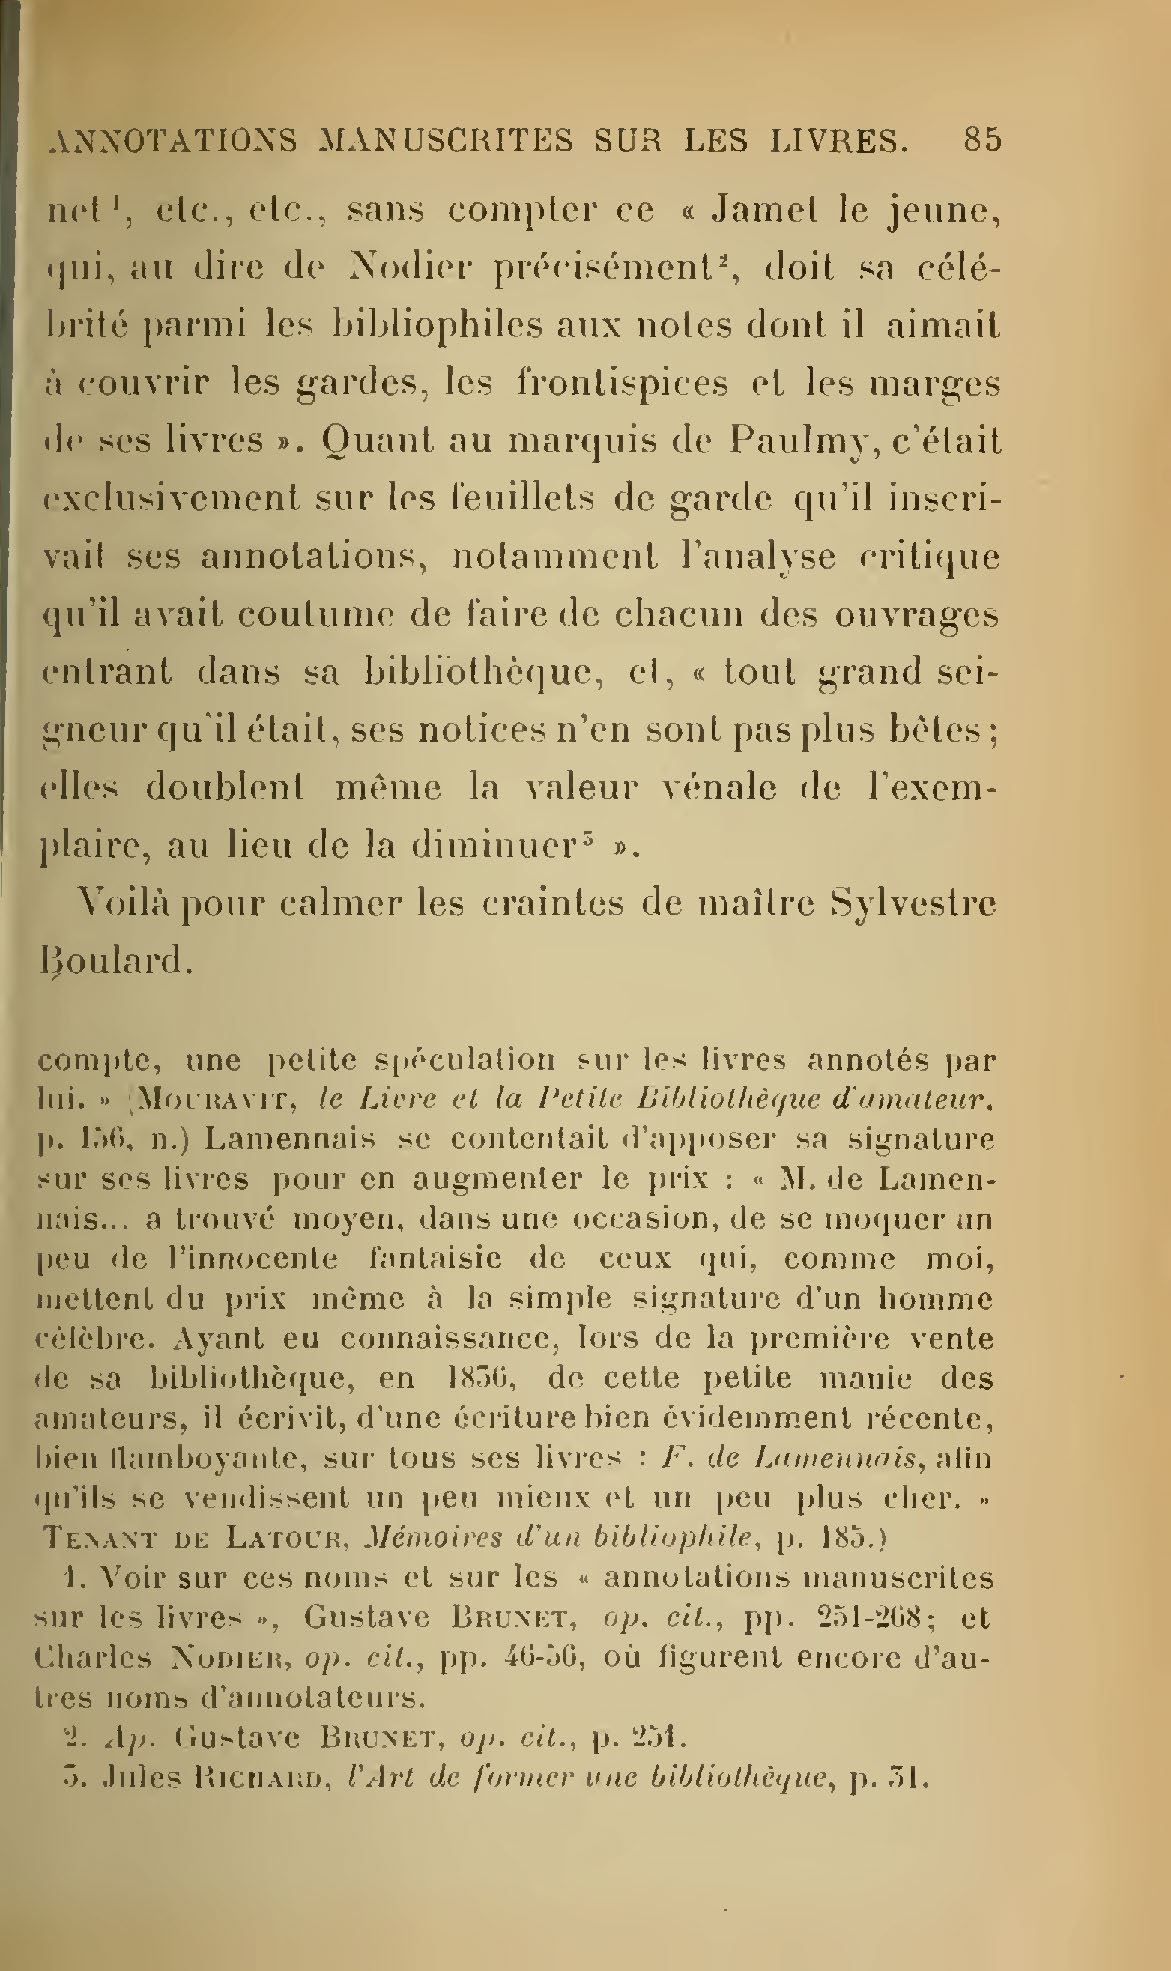 Albert Cim, Le Livre, t. II, p. 085.